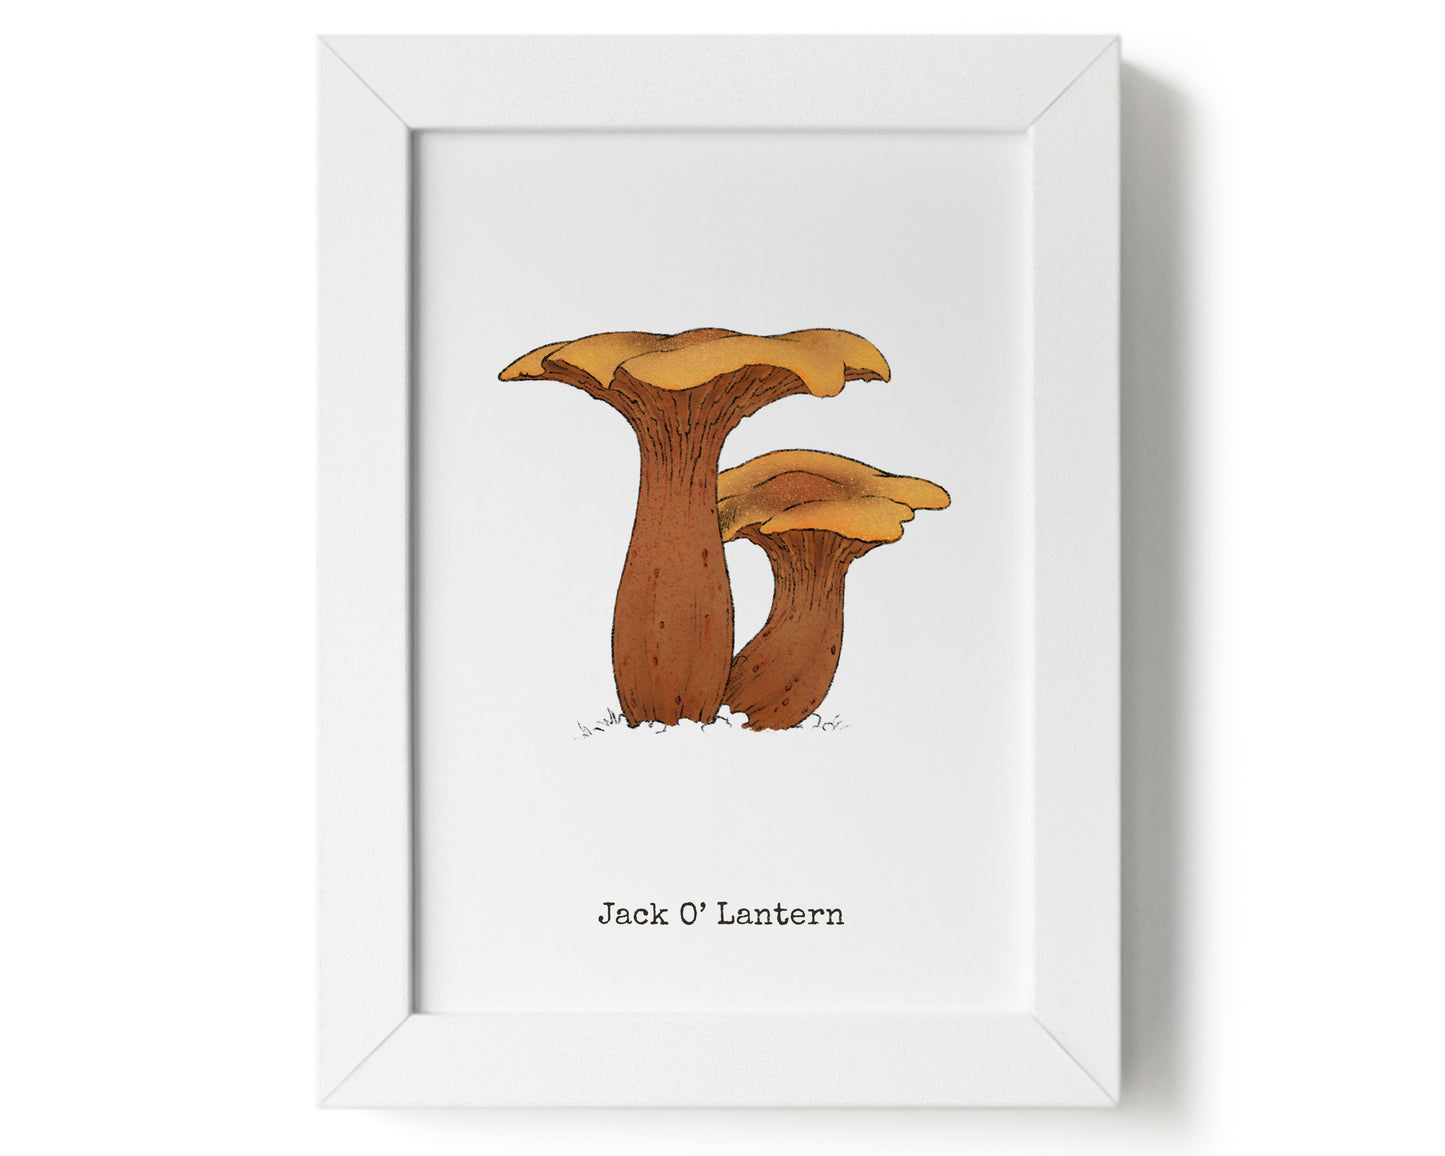 "Jack O'Lantern" by Catherine Hébert - Jack O'Lantern Mushroom Art Print - 5"x7" size